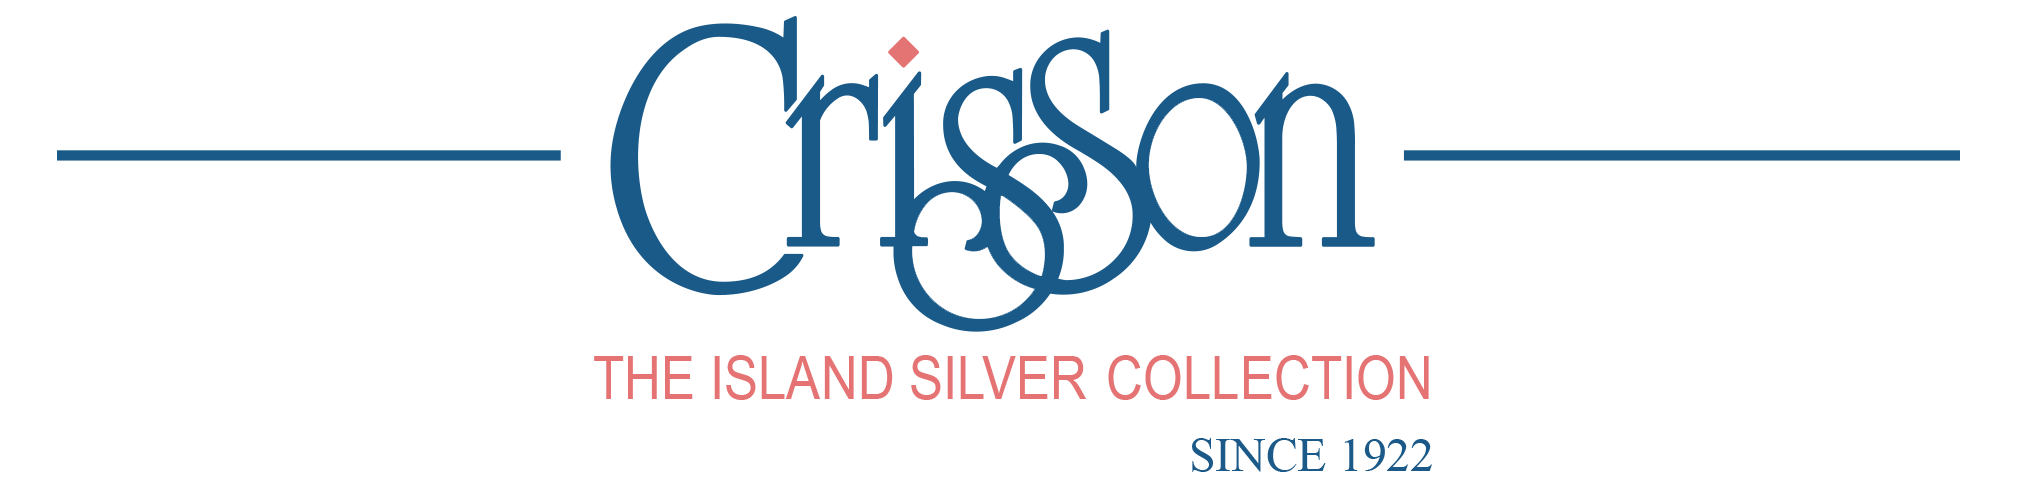 Crisson Island Silver Collection